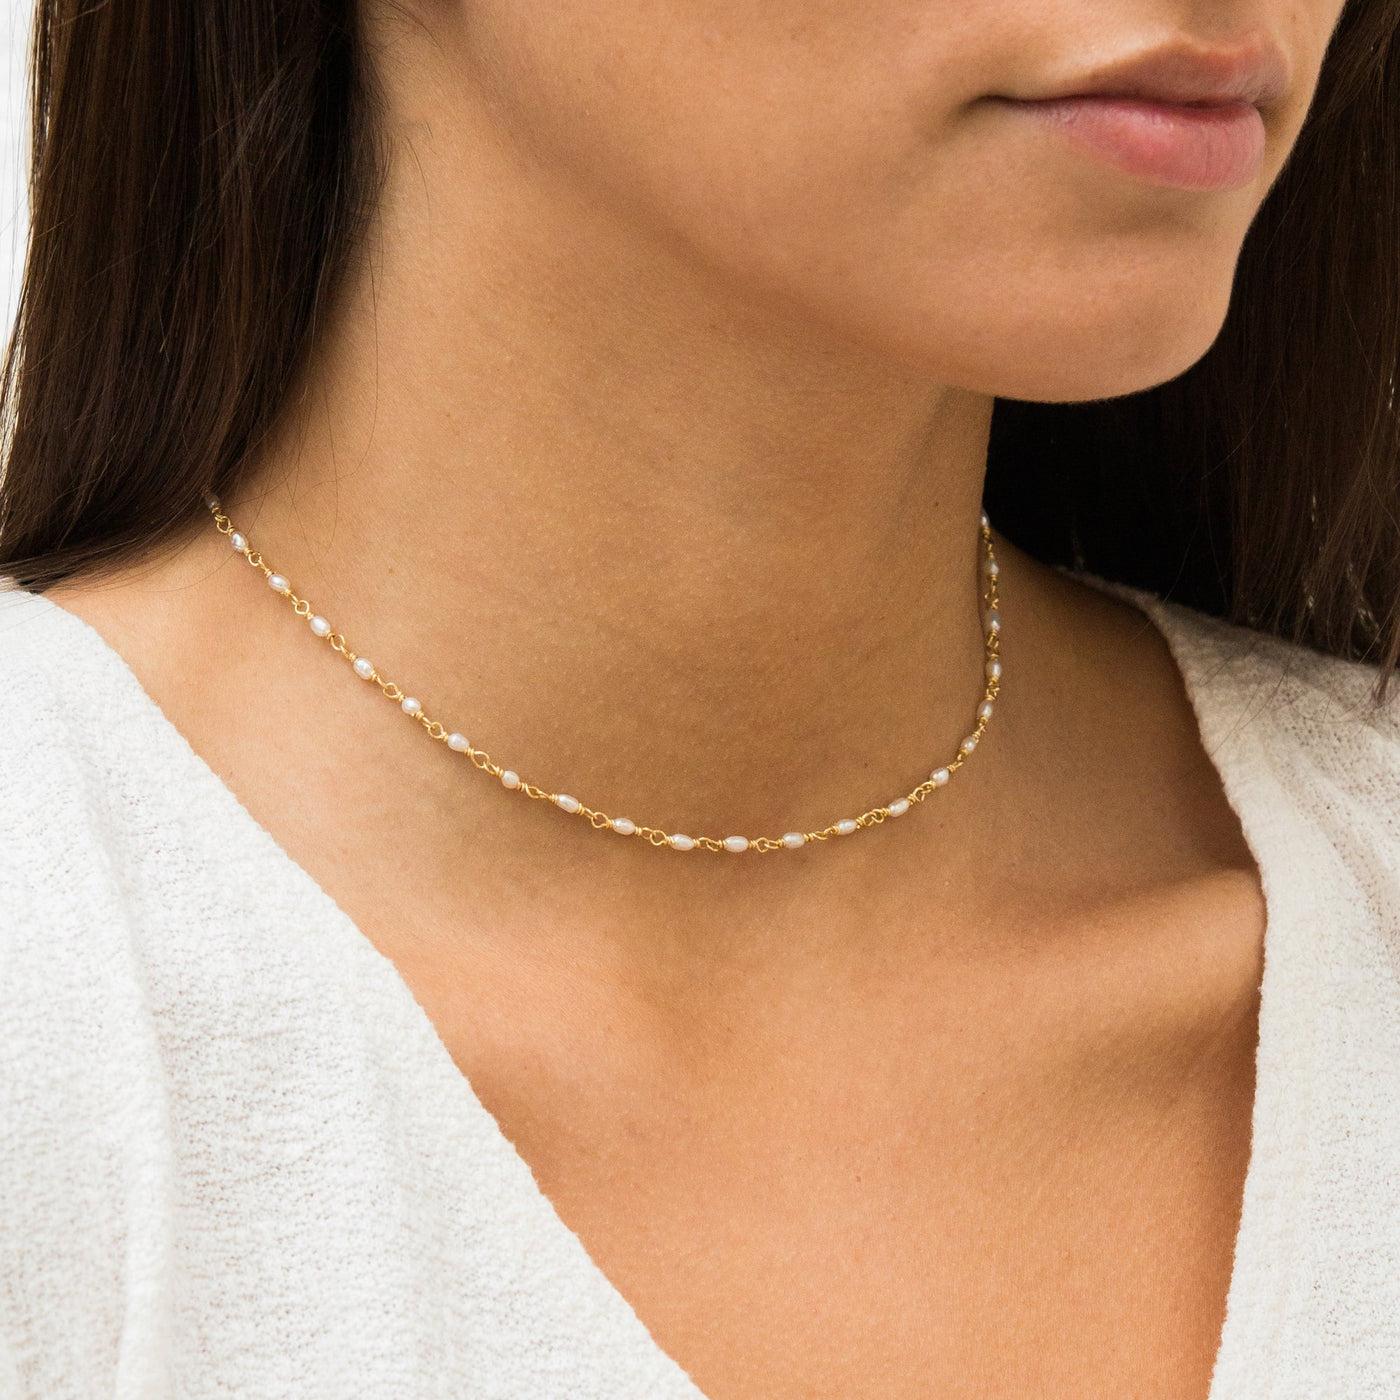 Simple White Pearl Necklace in Green Pendant - Modi Pearls